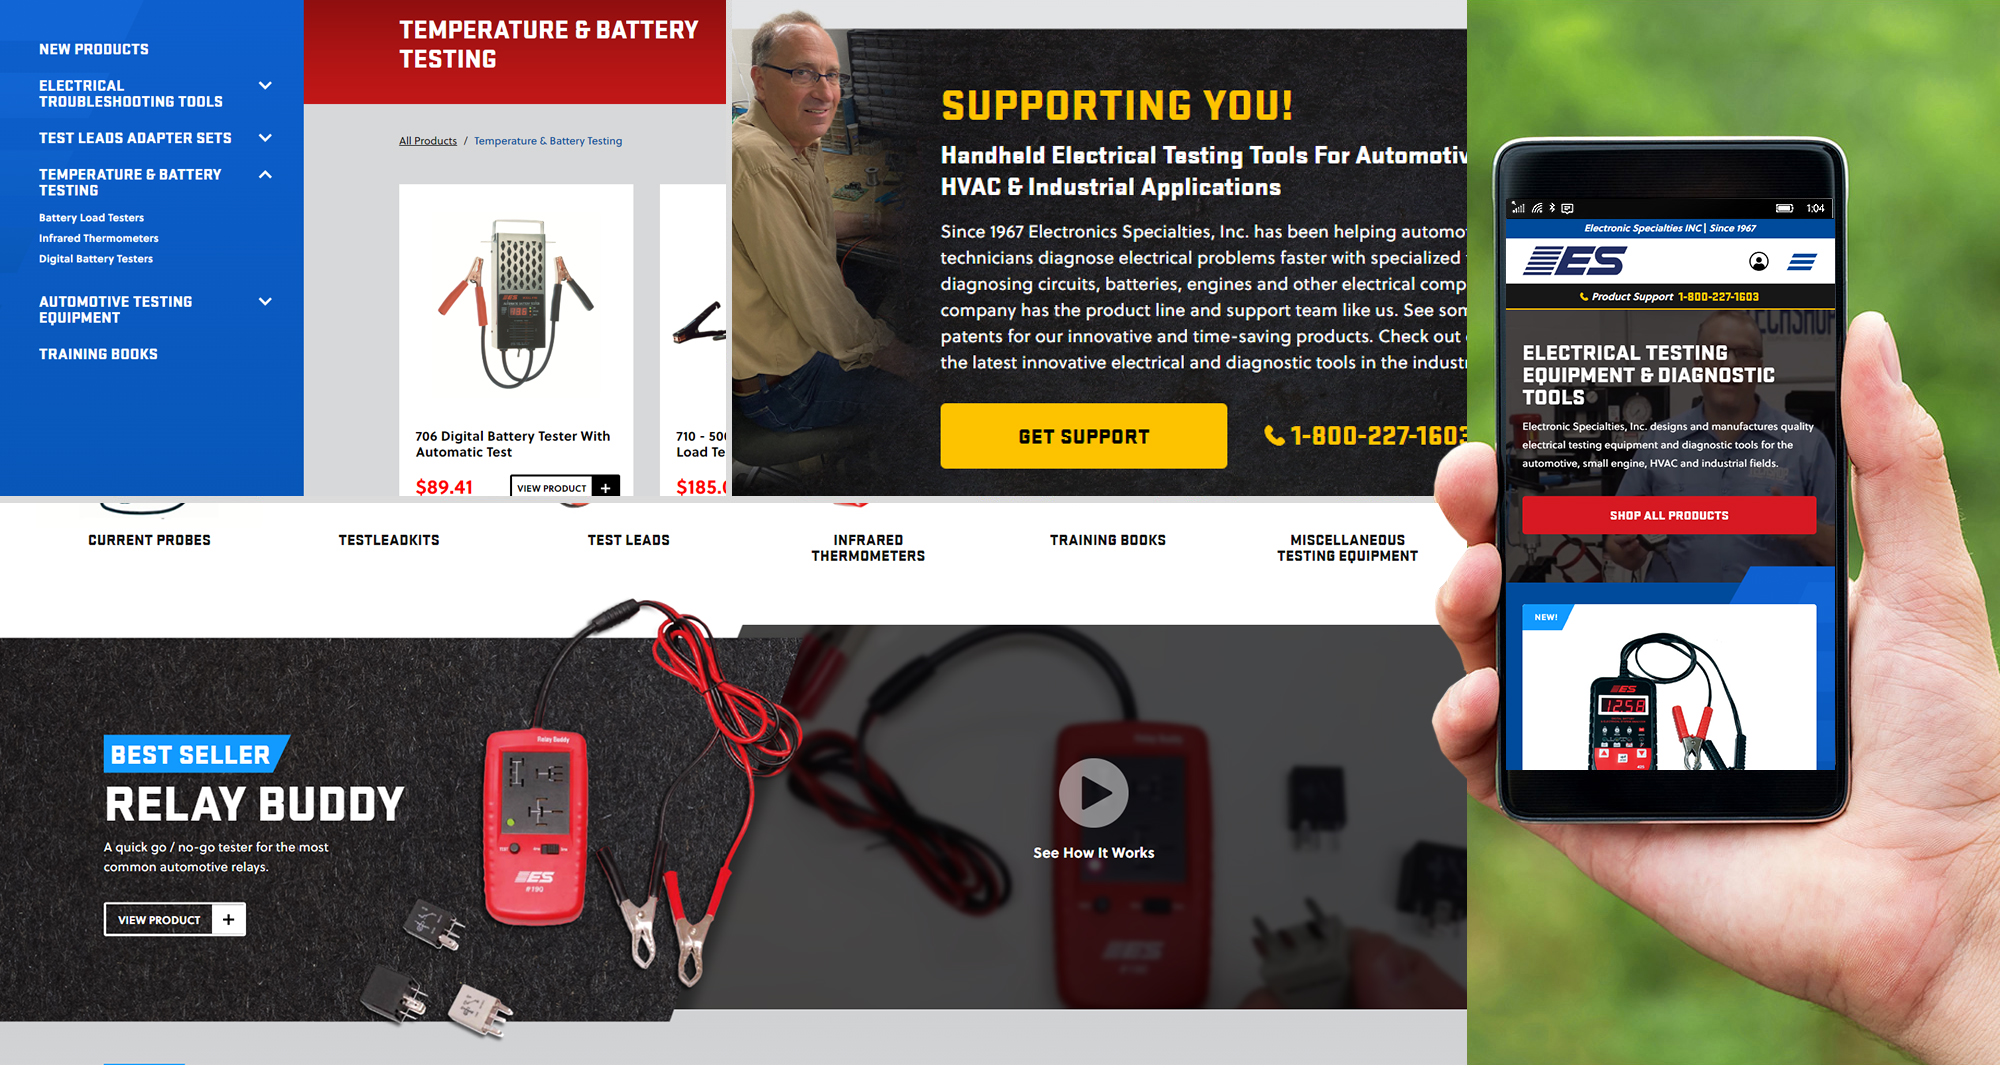 Milwaukee web marketing for Electronic Specialties INC